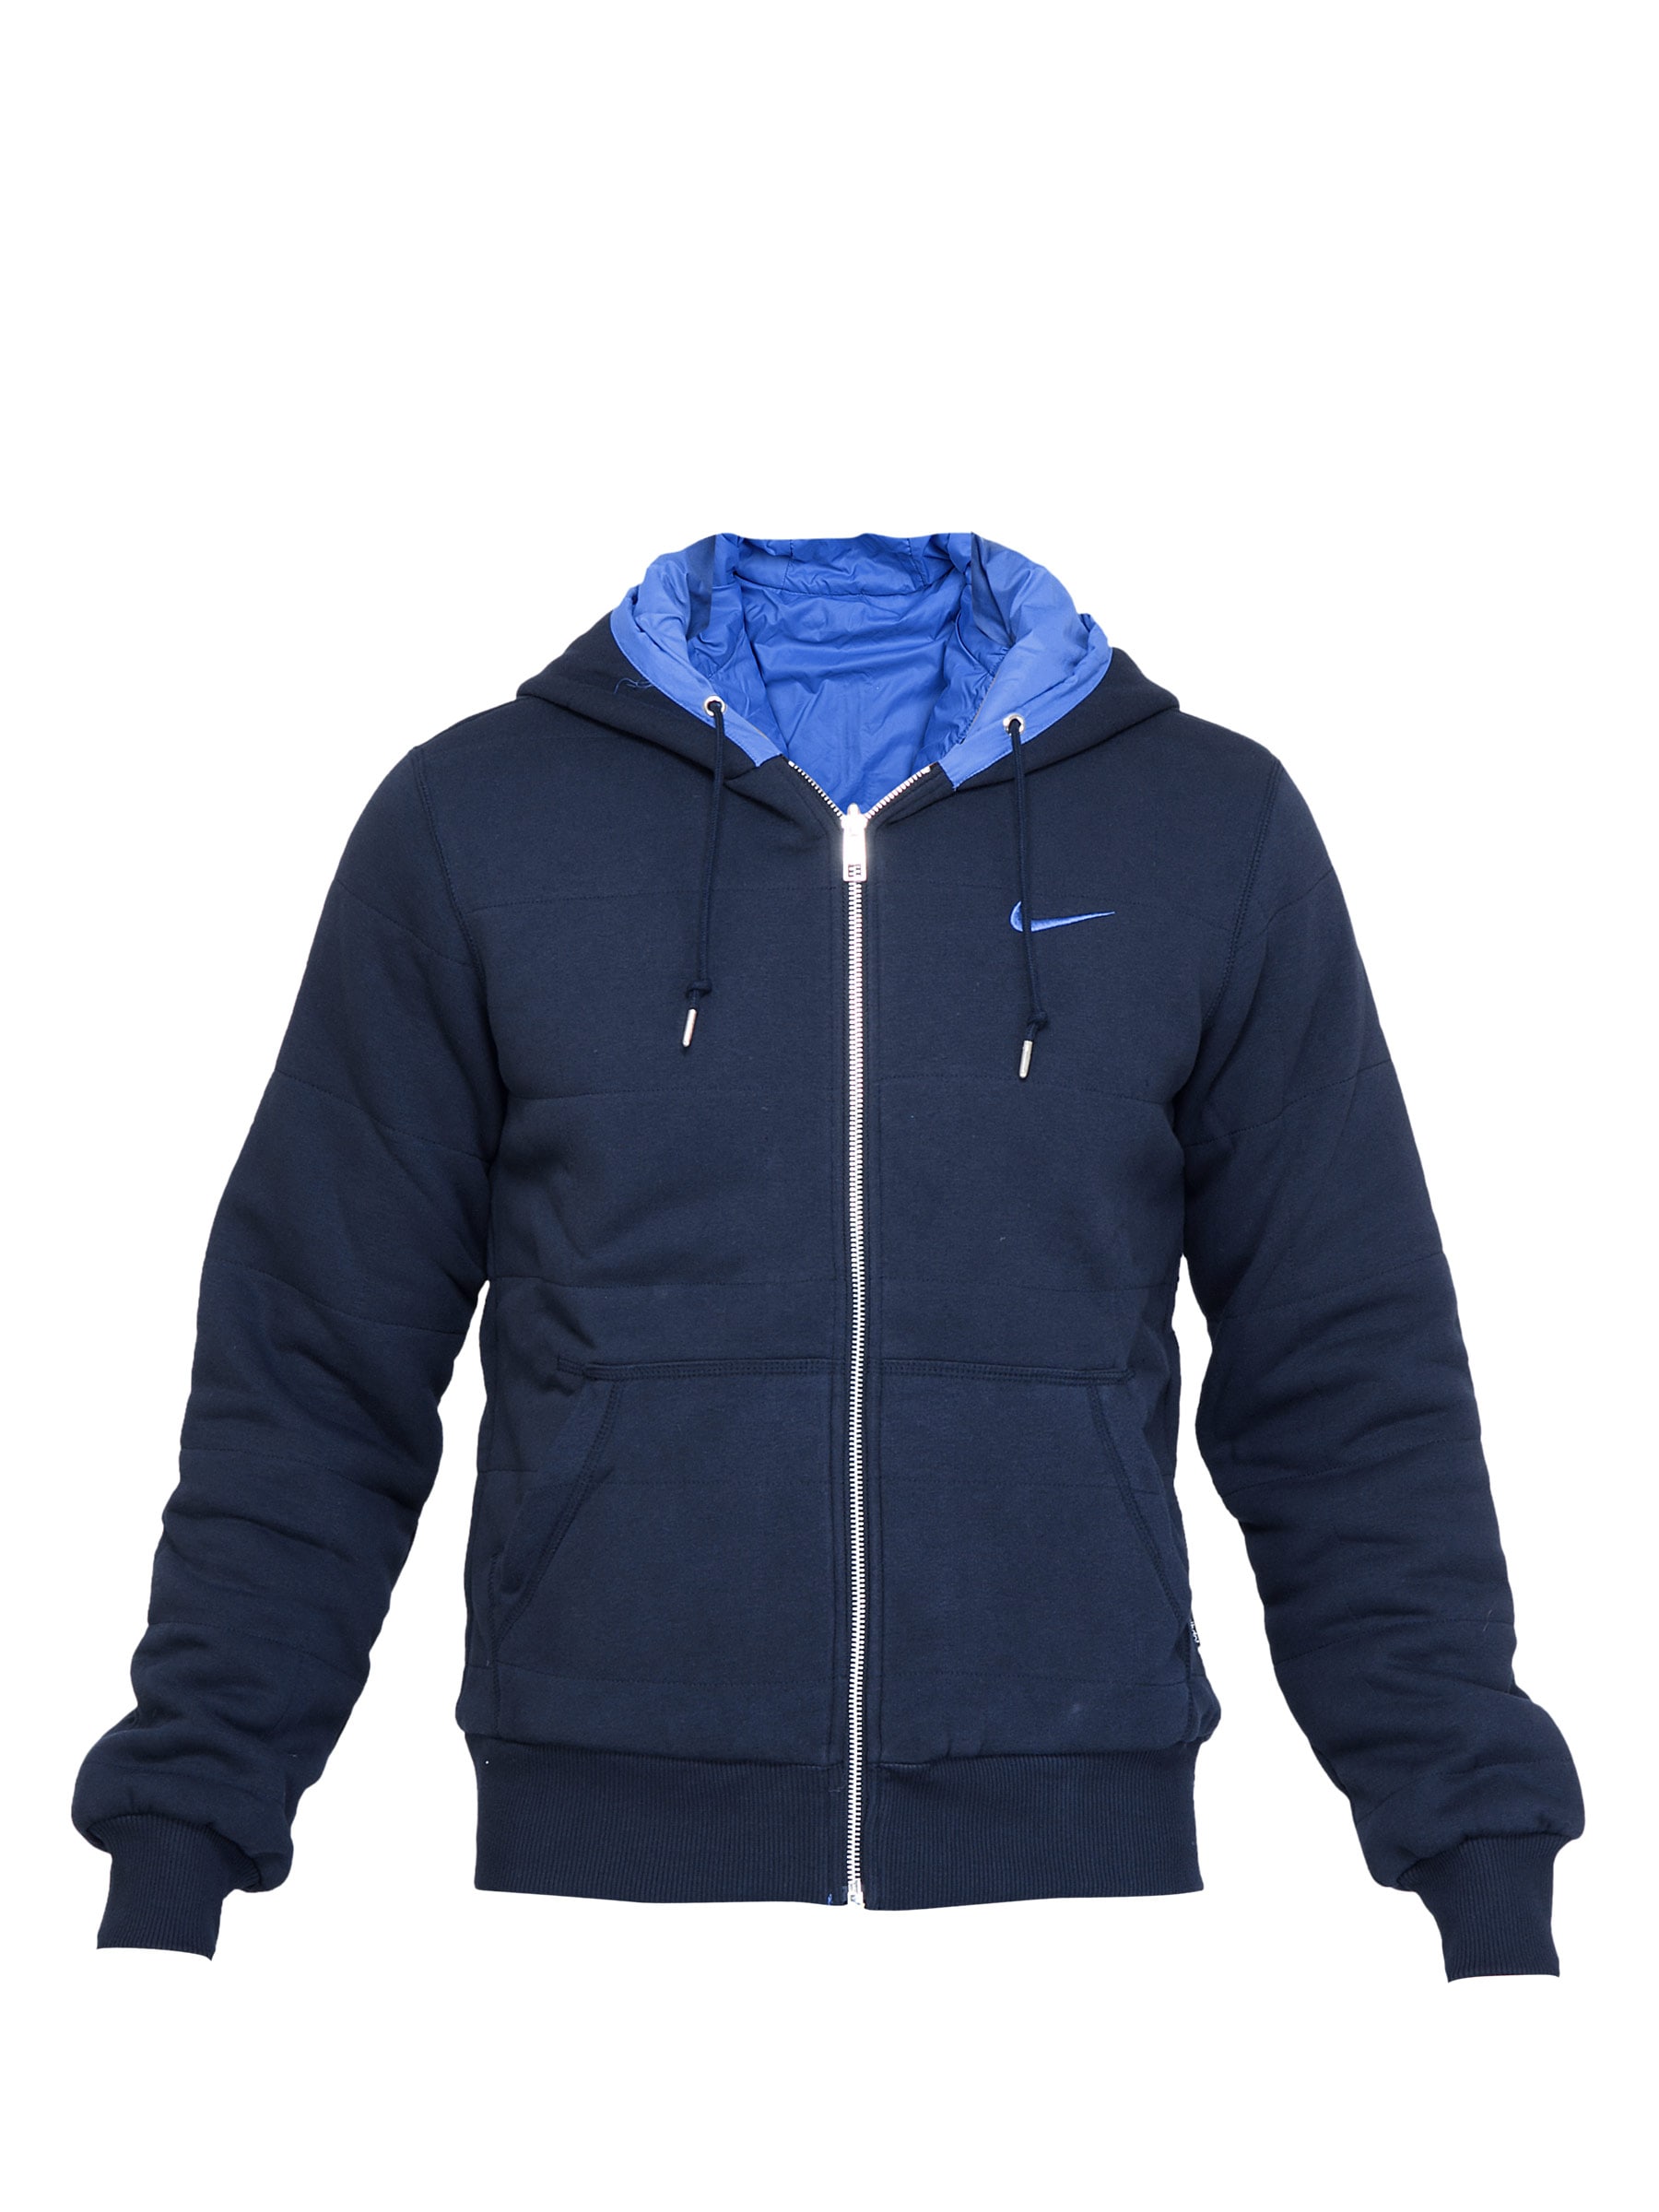 Nike Men Solid Navy Blue Jackets